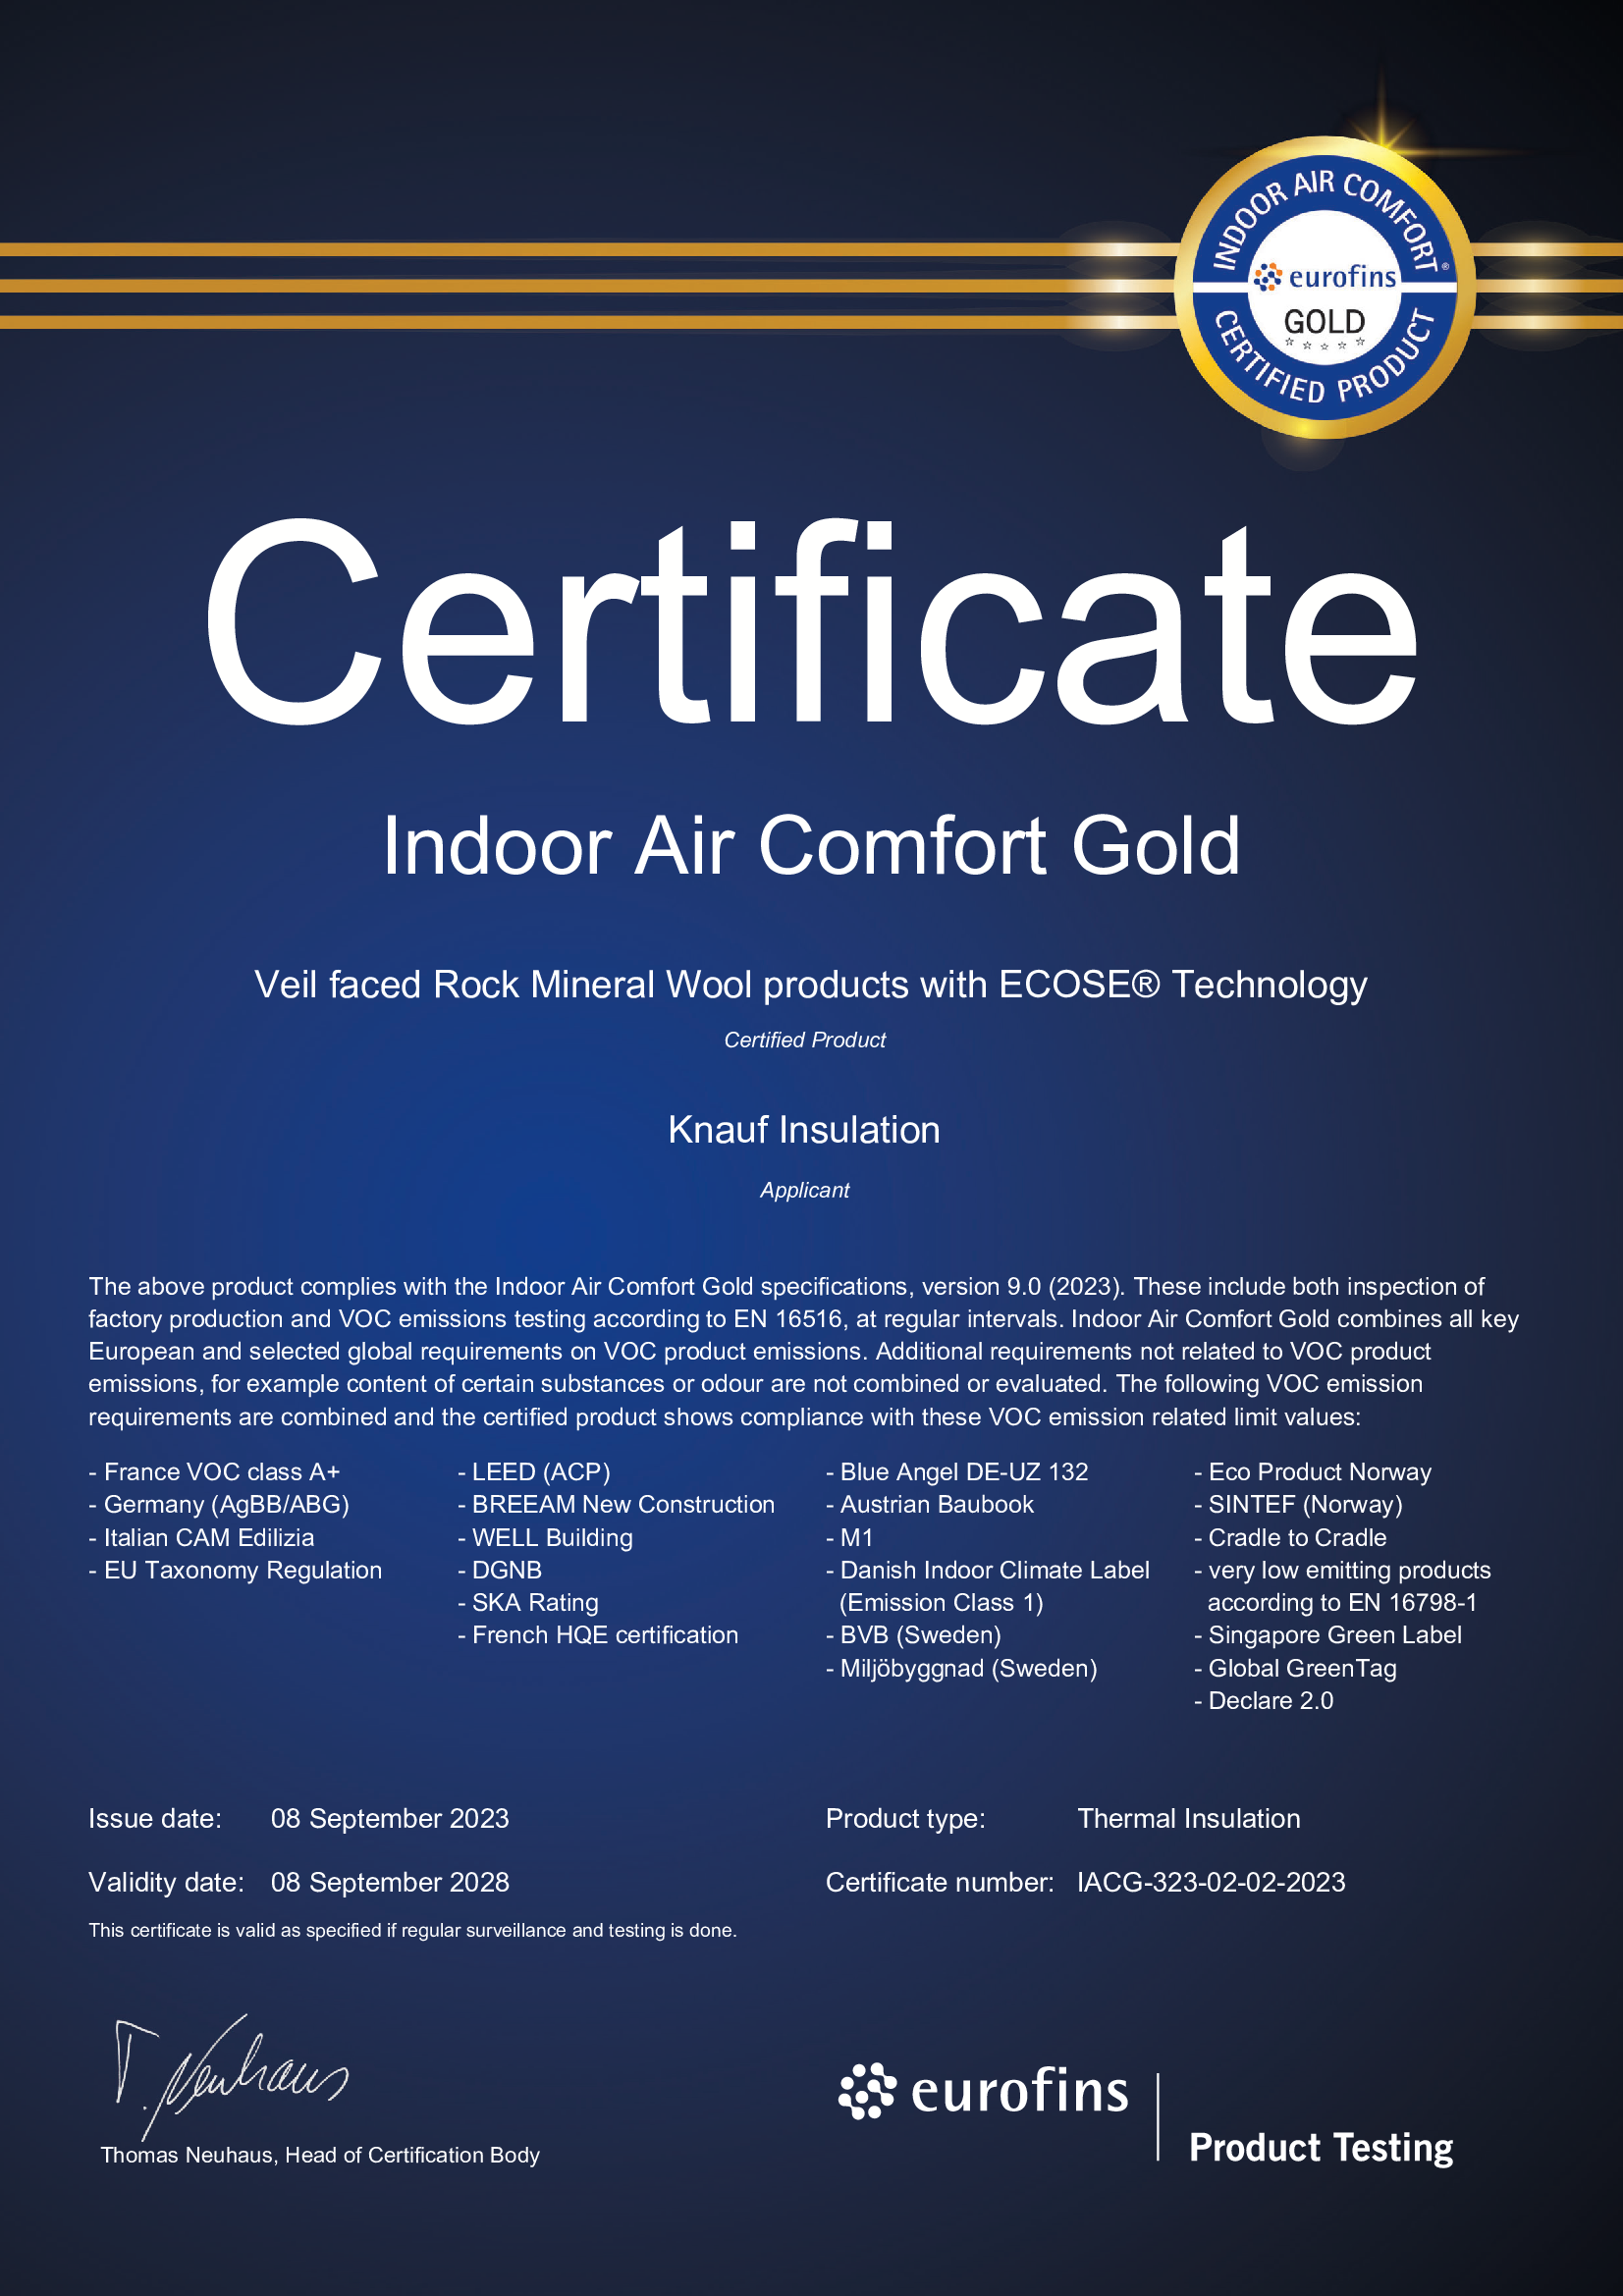 Indoor Air Quality (IACG-323-02-02-2023_IAC ) Eurofins GOLD Novi Marof (veil faced RMW products)